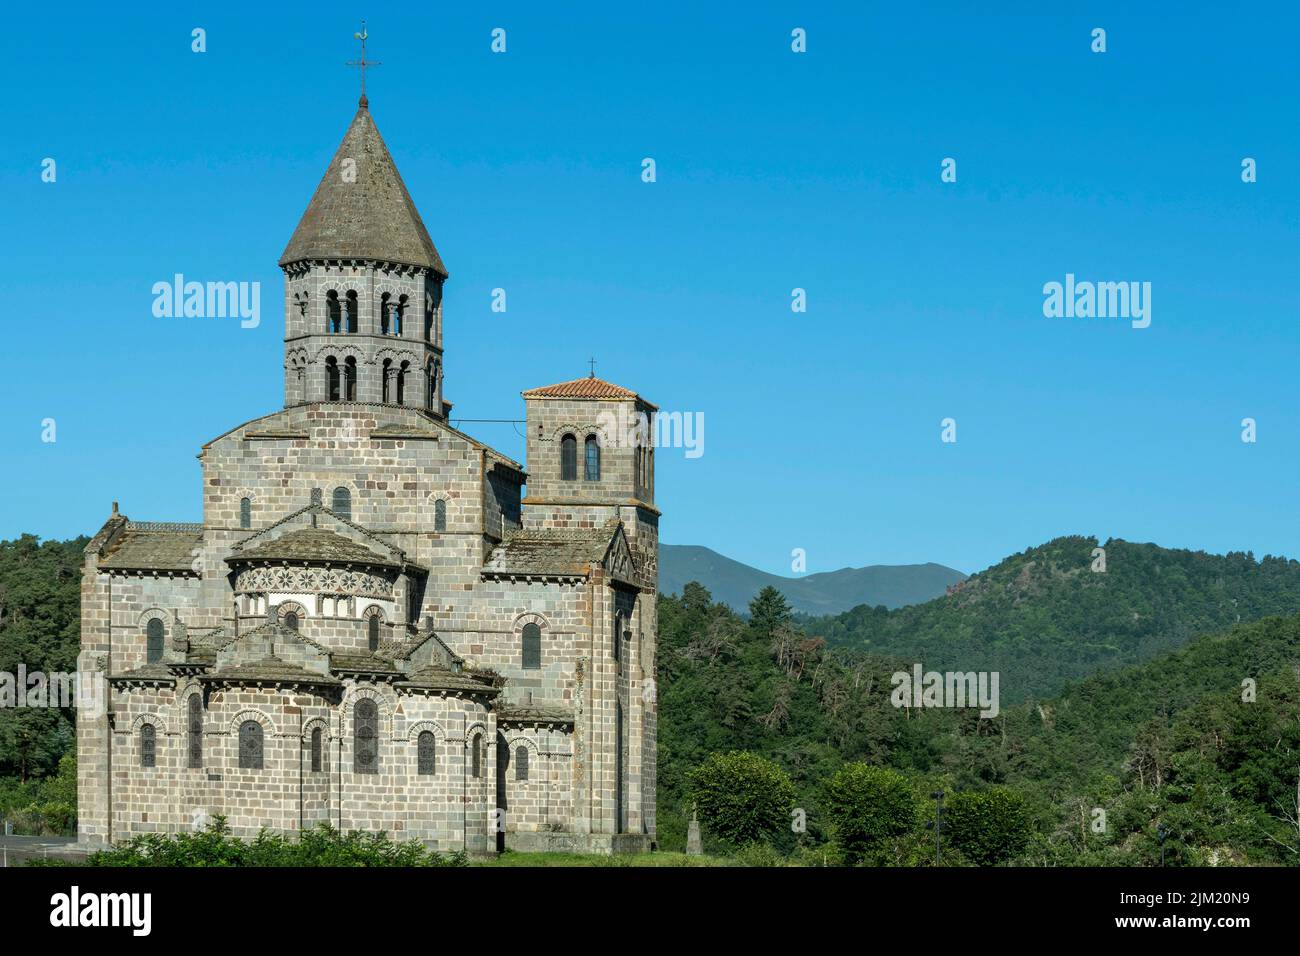 Iglesia románica de Saint Nectaire, parque natural regional de los volcanes de Auvernia, Puy de Dome, Auvernia Ródano-Alpes, Francia Foto de stock